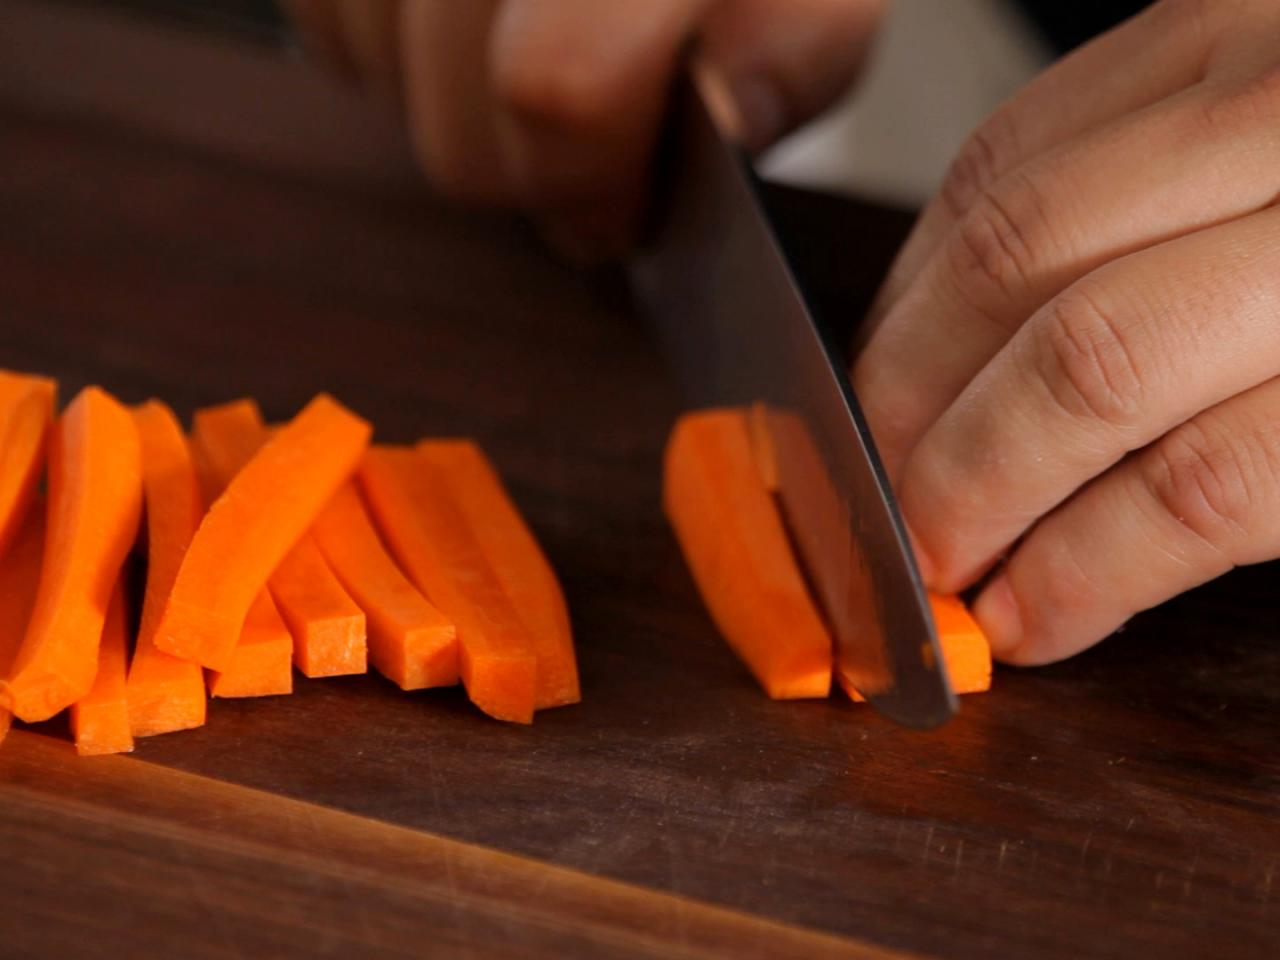 Нож режет овощи. Нарезанные овощи. Жардиньер форма нарезки. Алюмет форма нарезки. Алюмет нарезка овощей.